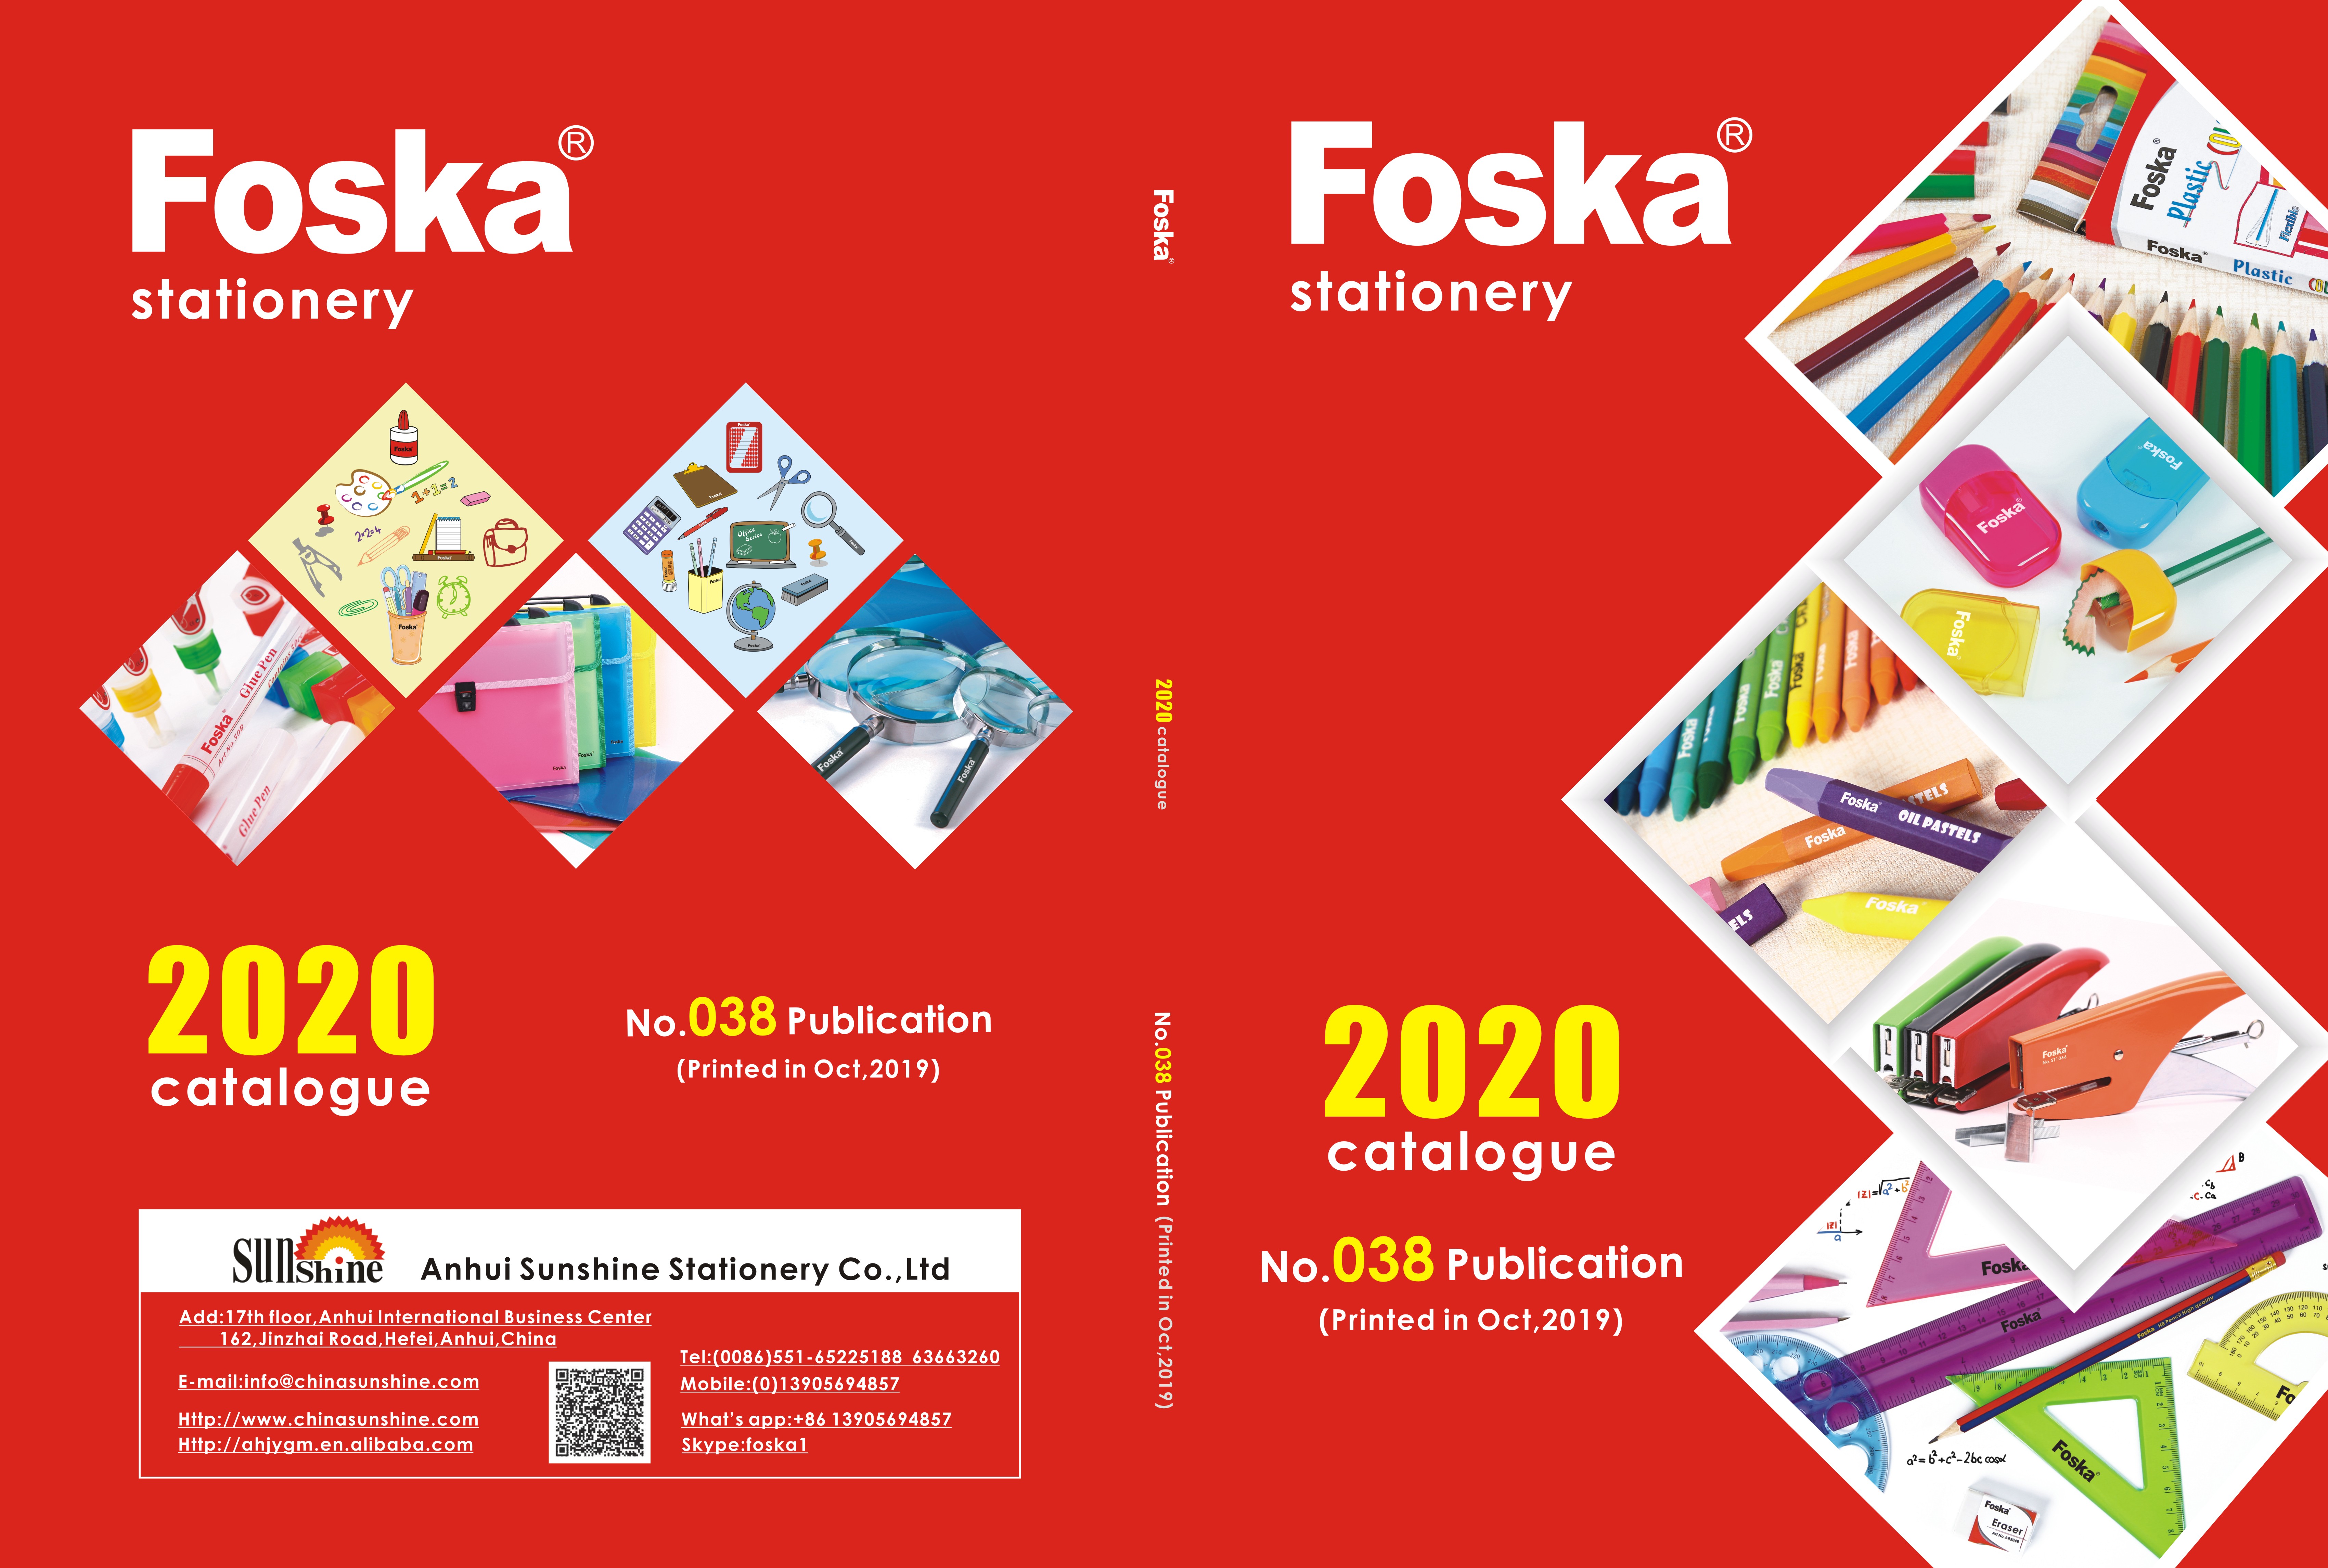 Foska Latest Catalogue for 2020